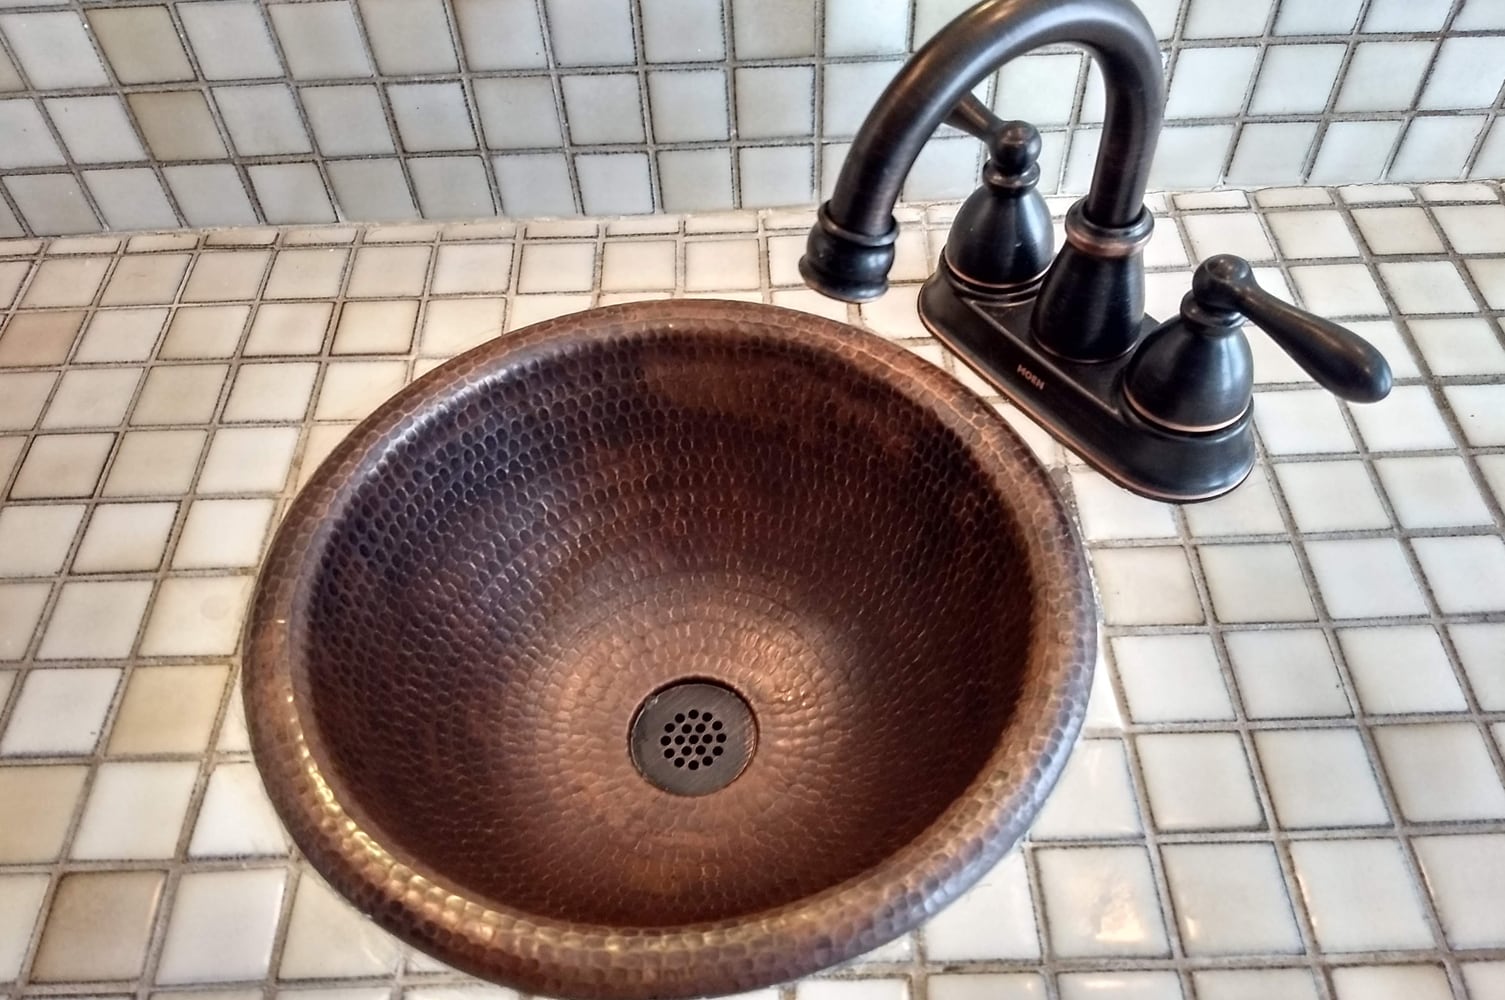 Rustic Oil Rubbed Pure Copper PETITE  Bathroom Sink Wash Basin Bowl Washbasin 